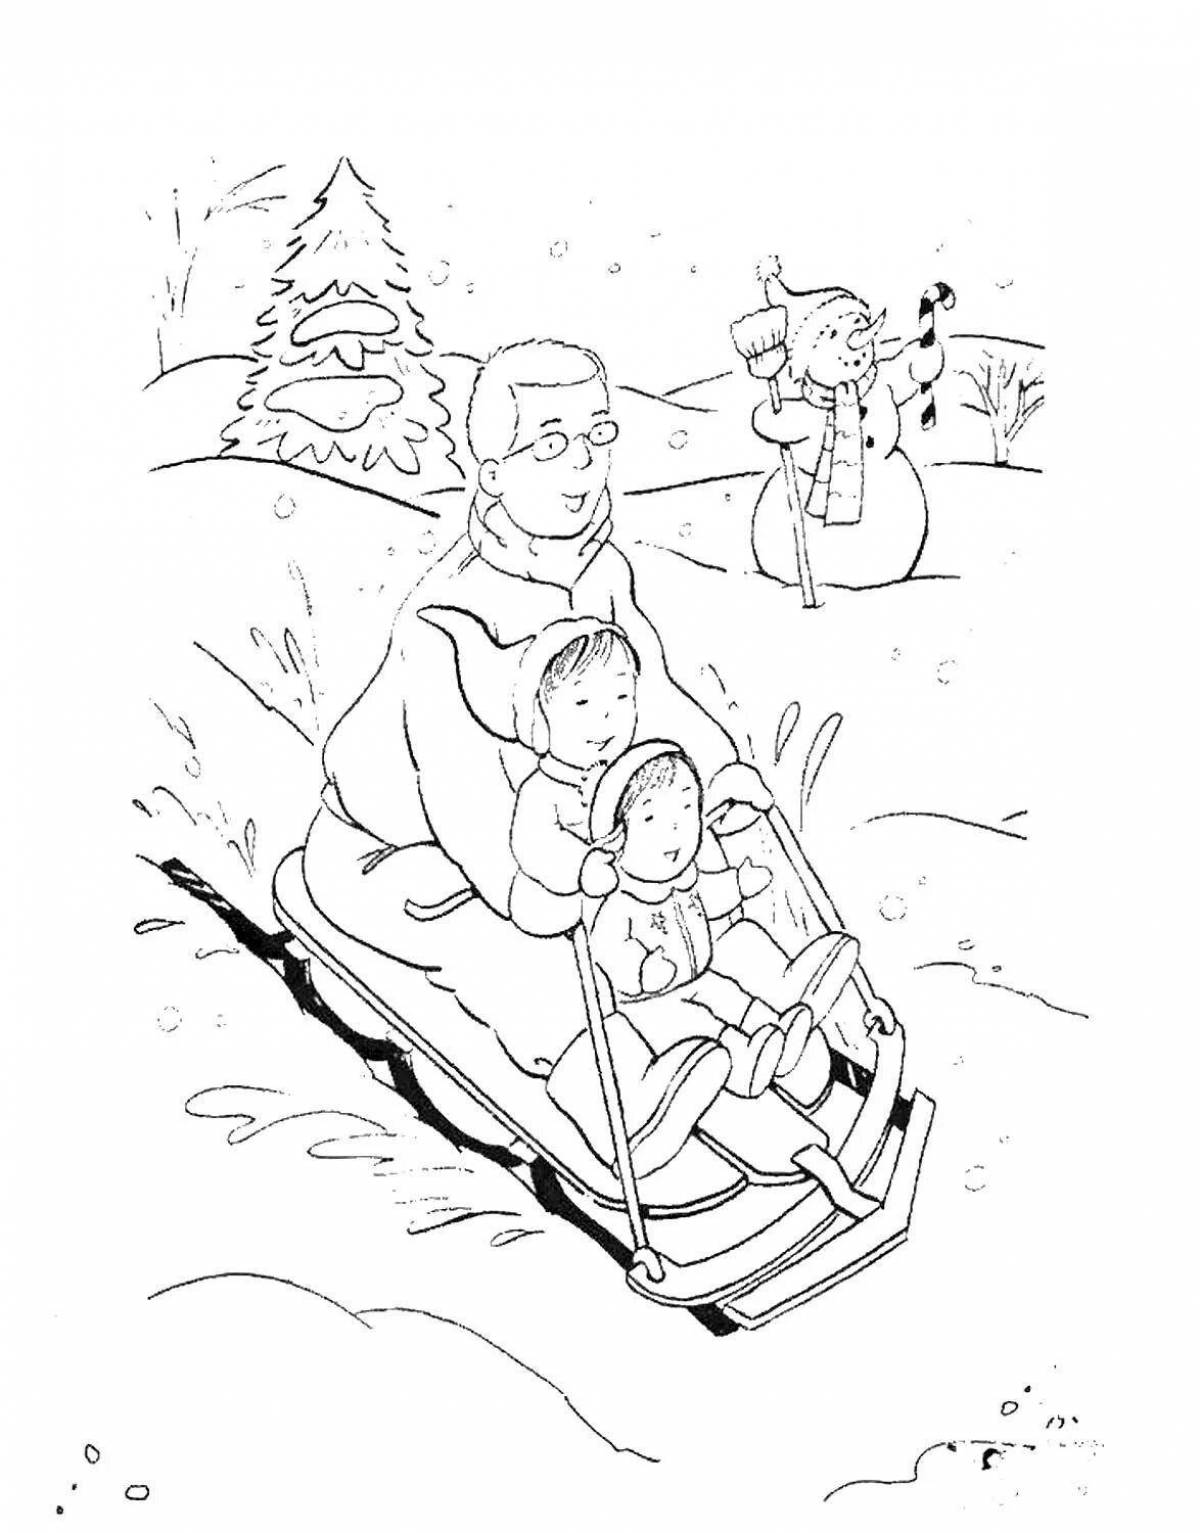 Happy children sledding down the mountain